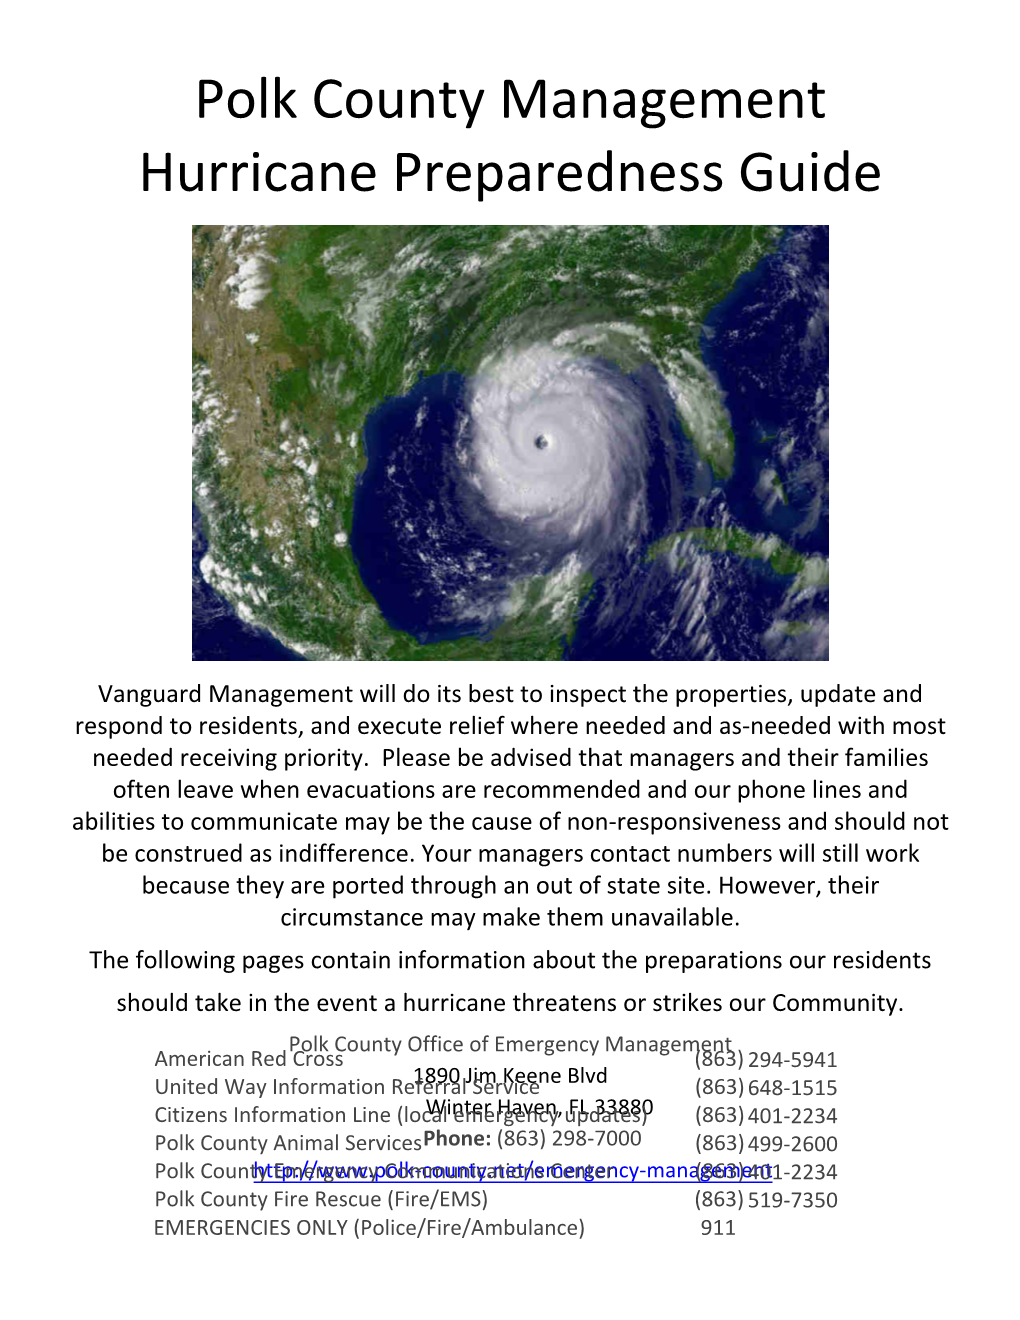 Polk County Management Hurricane Preparedness Guide